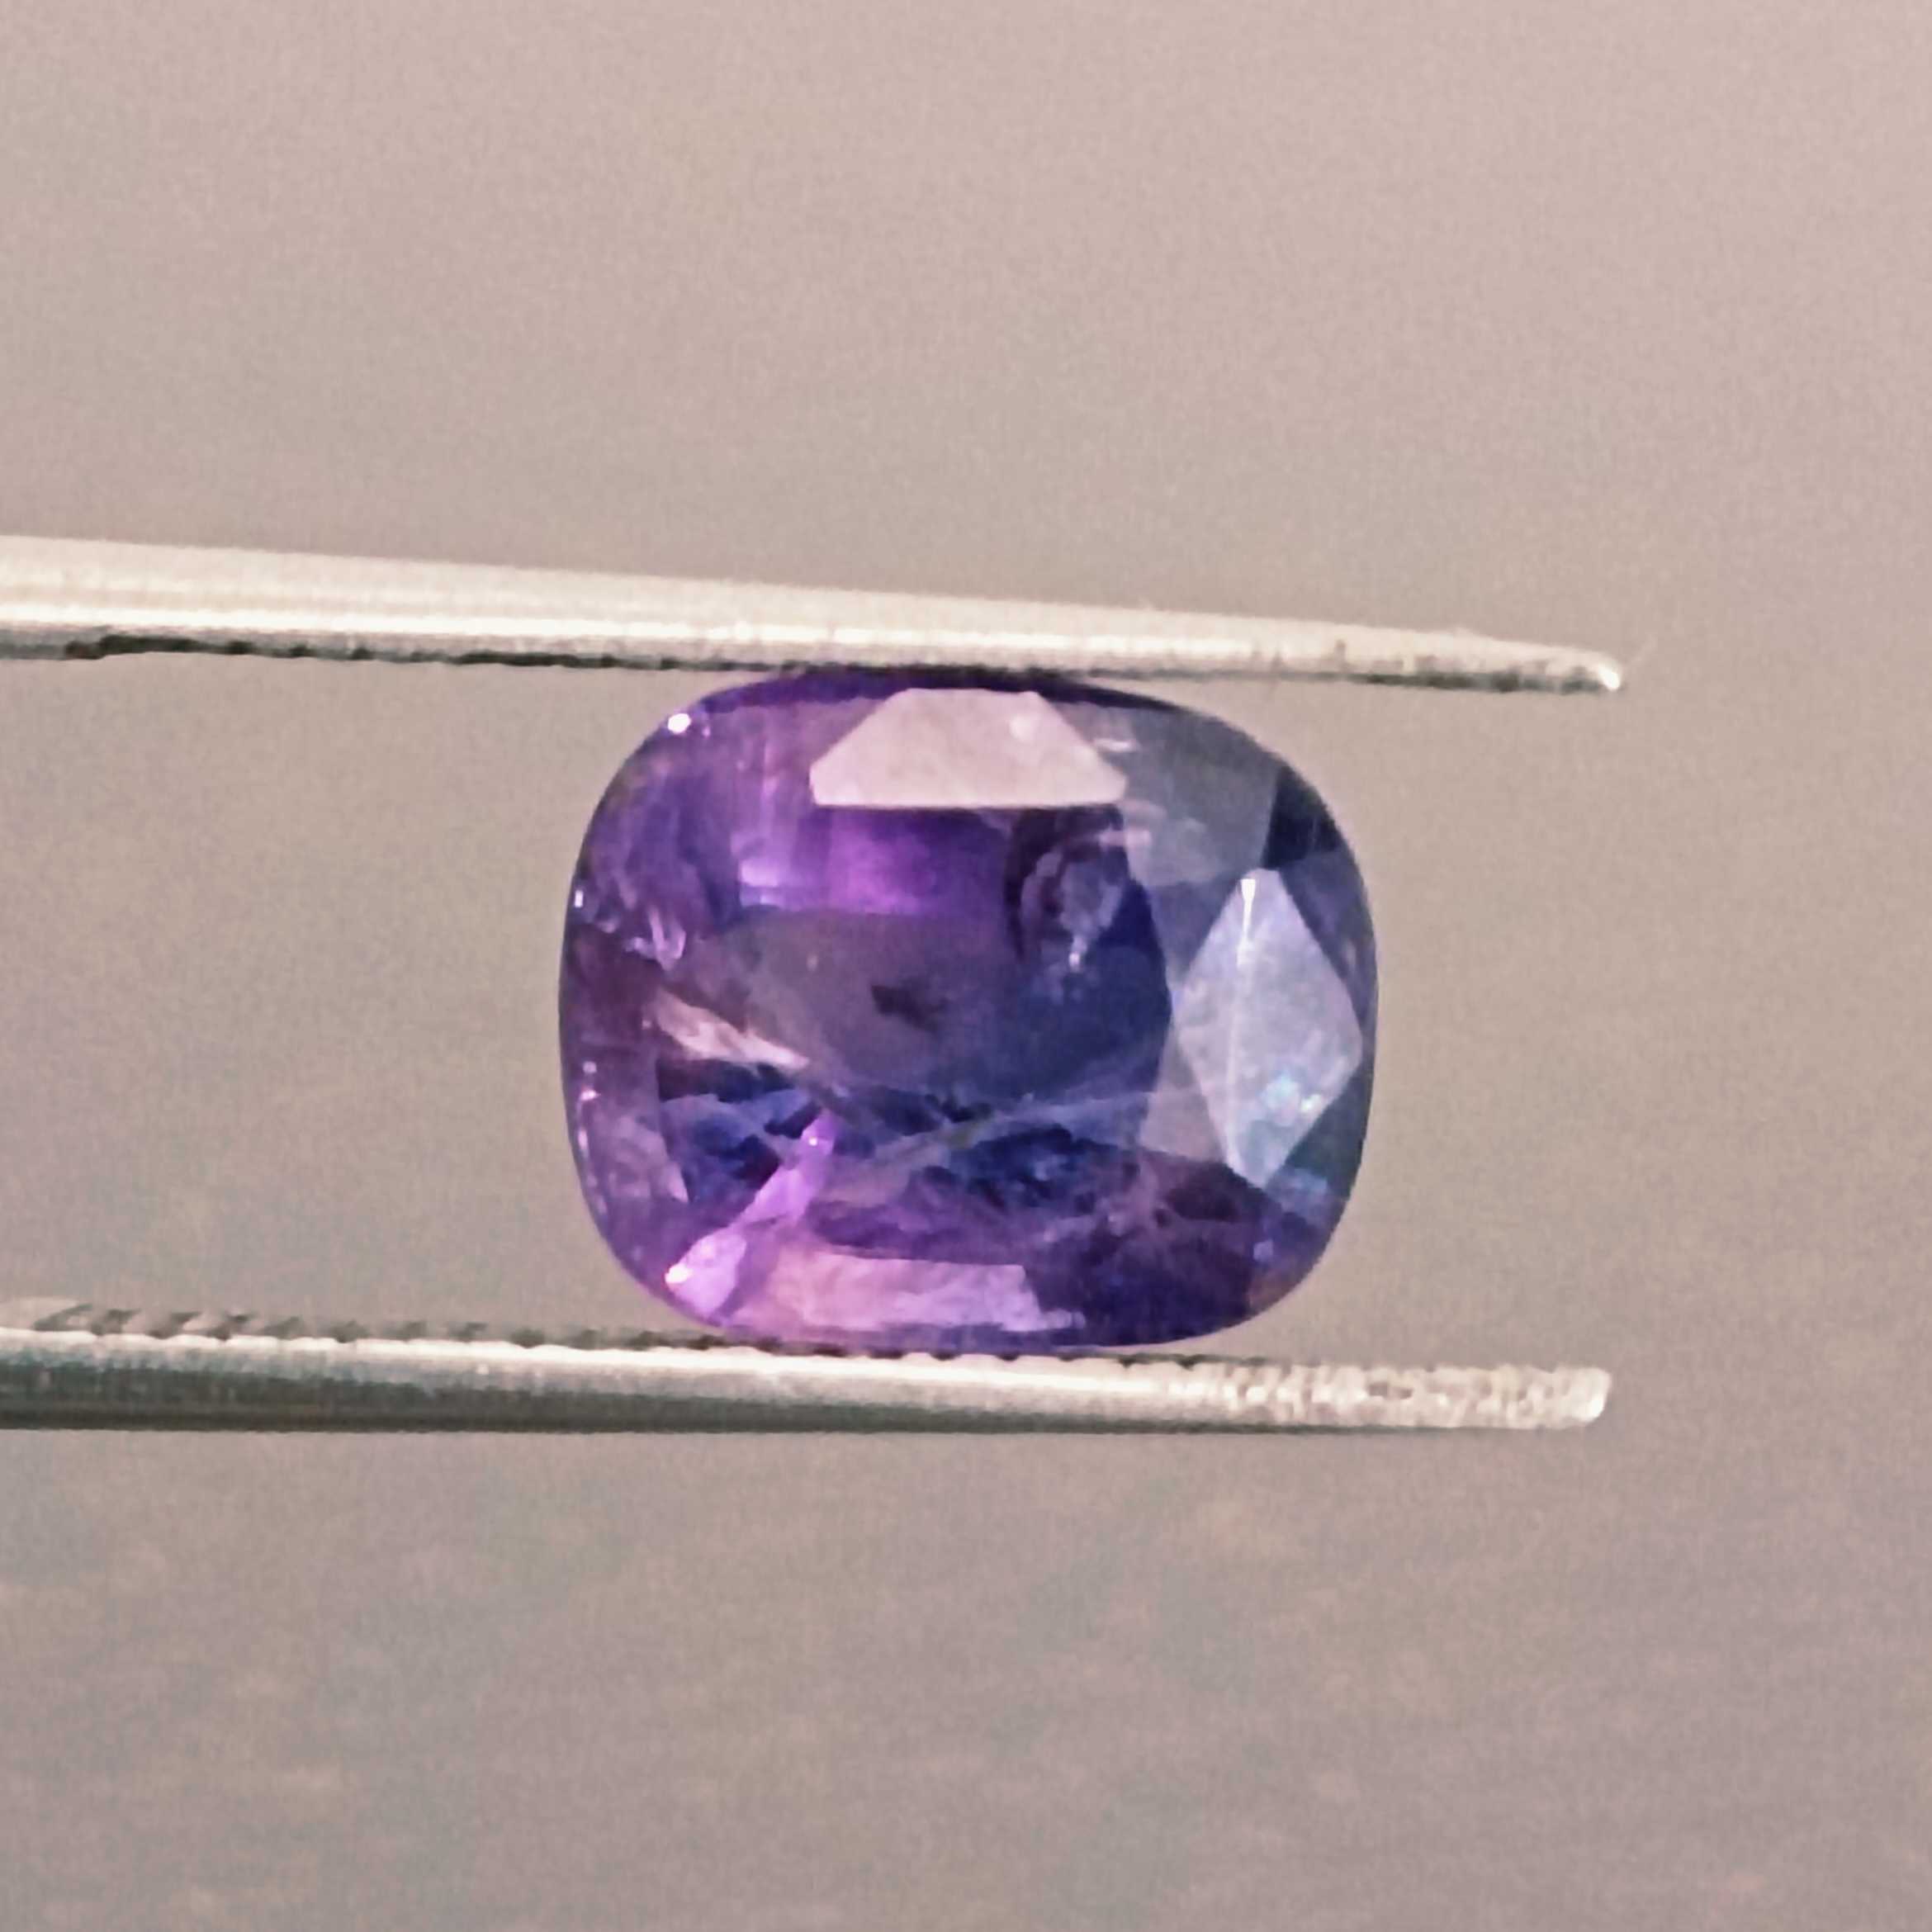 2.90ct  IGI certified deep purple blue cushion cut sapphire/